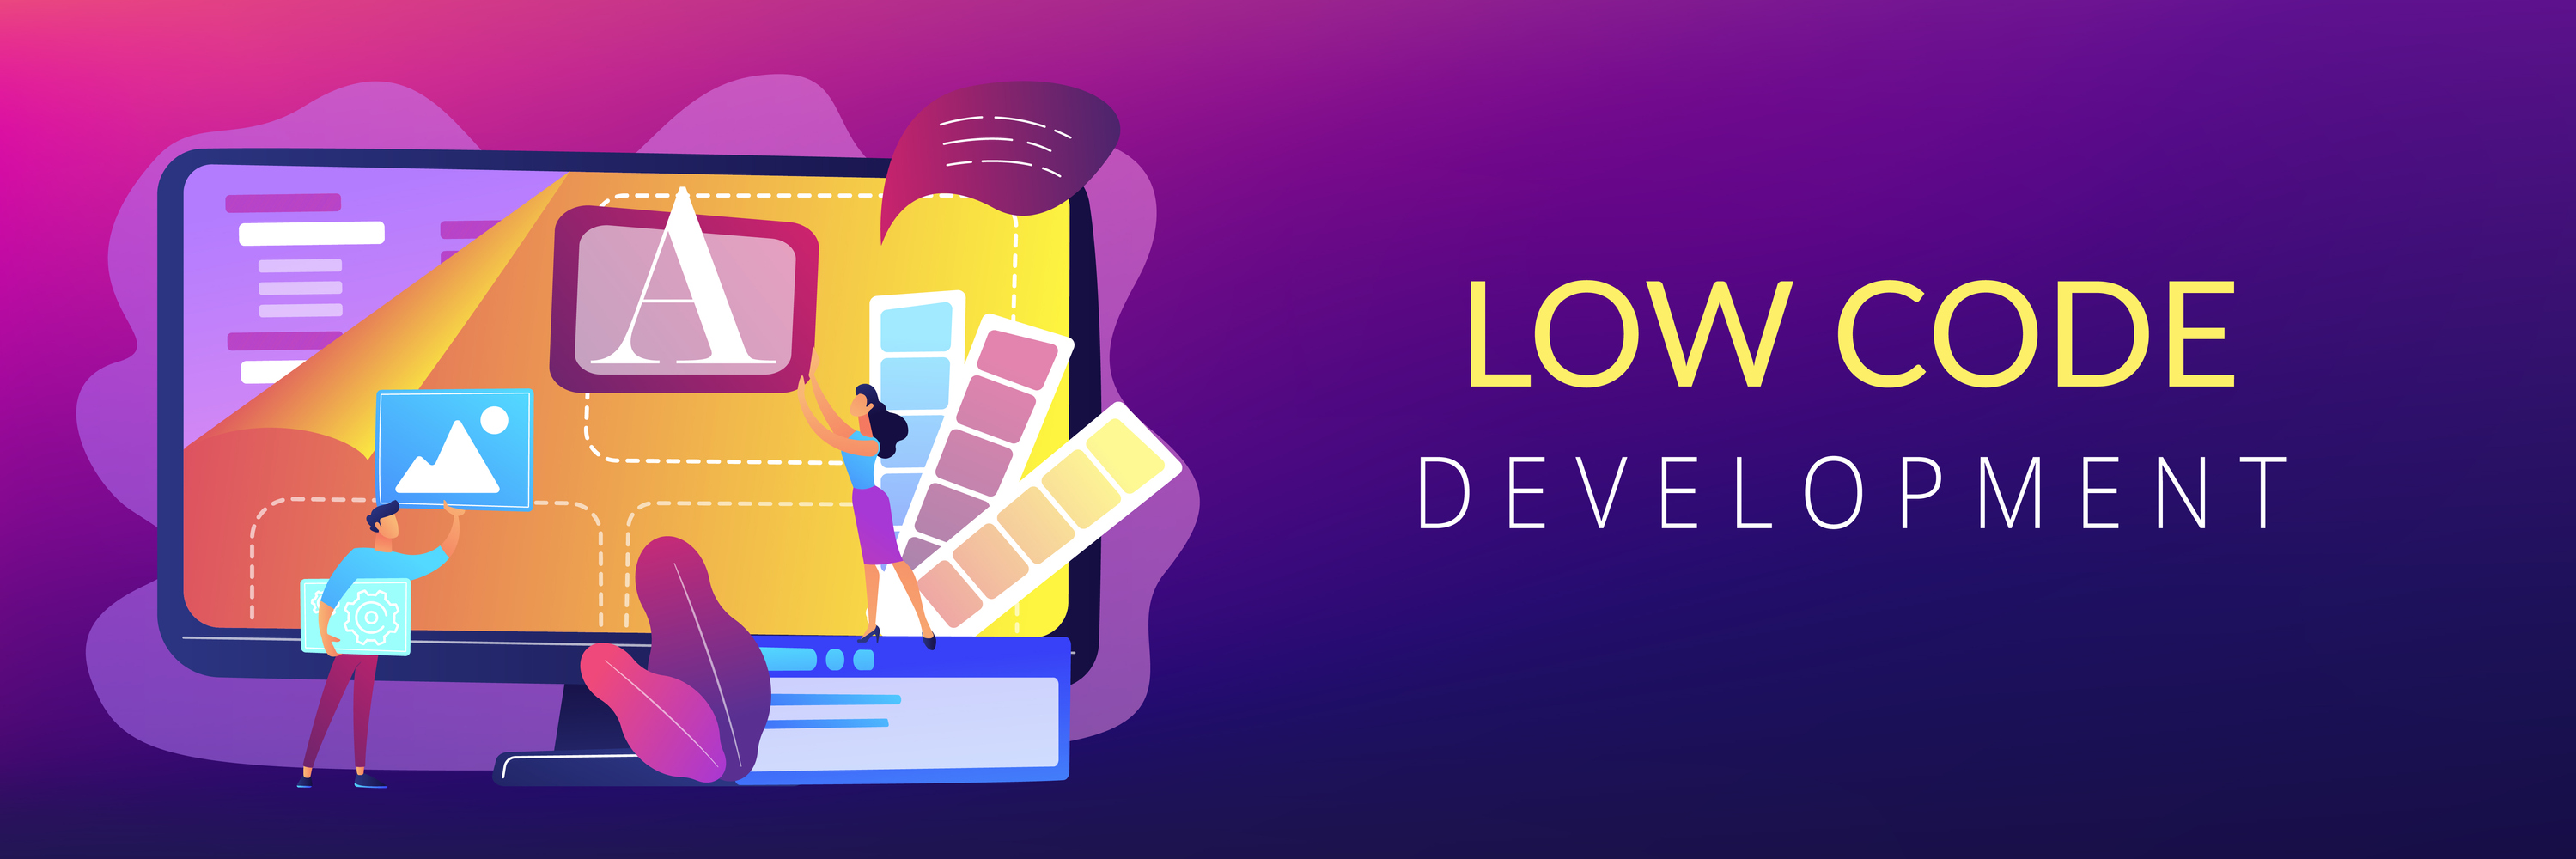 Low code development concept banner header.